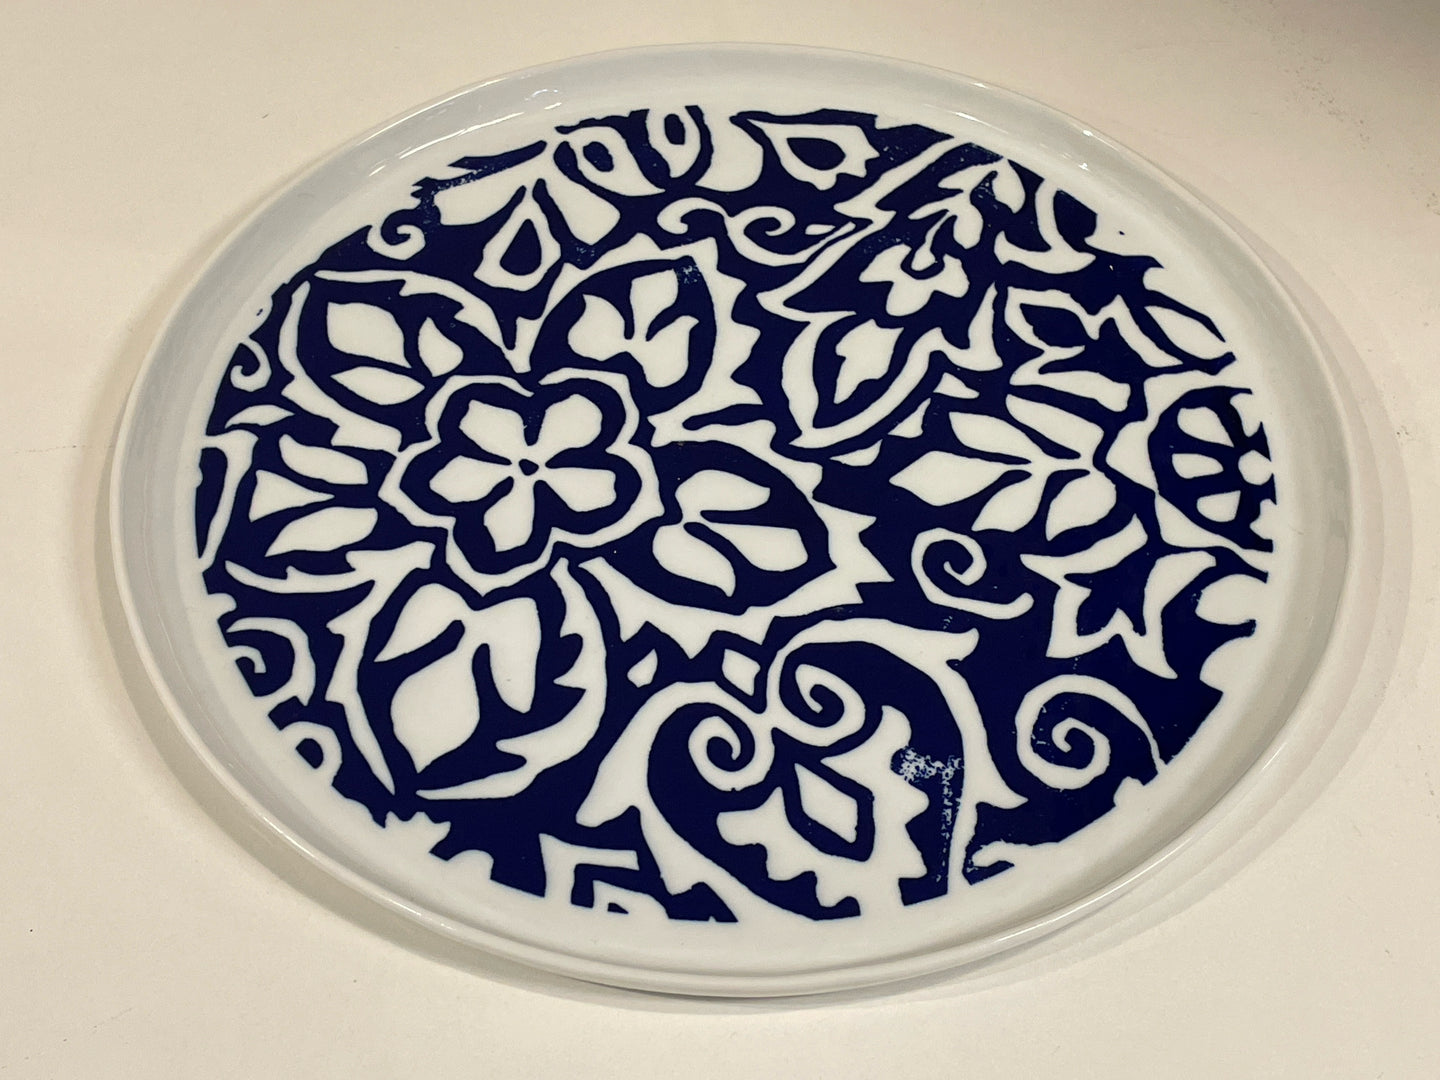 Blue & White Ceramic Plate from Crate & Barrel